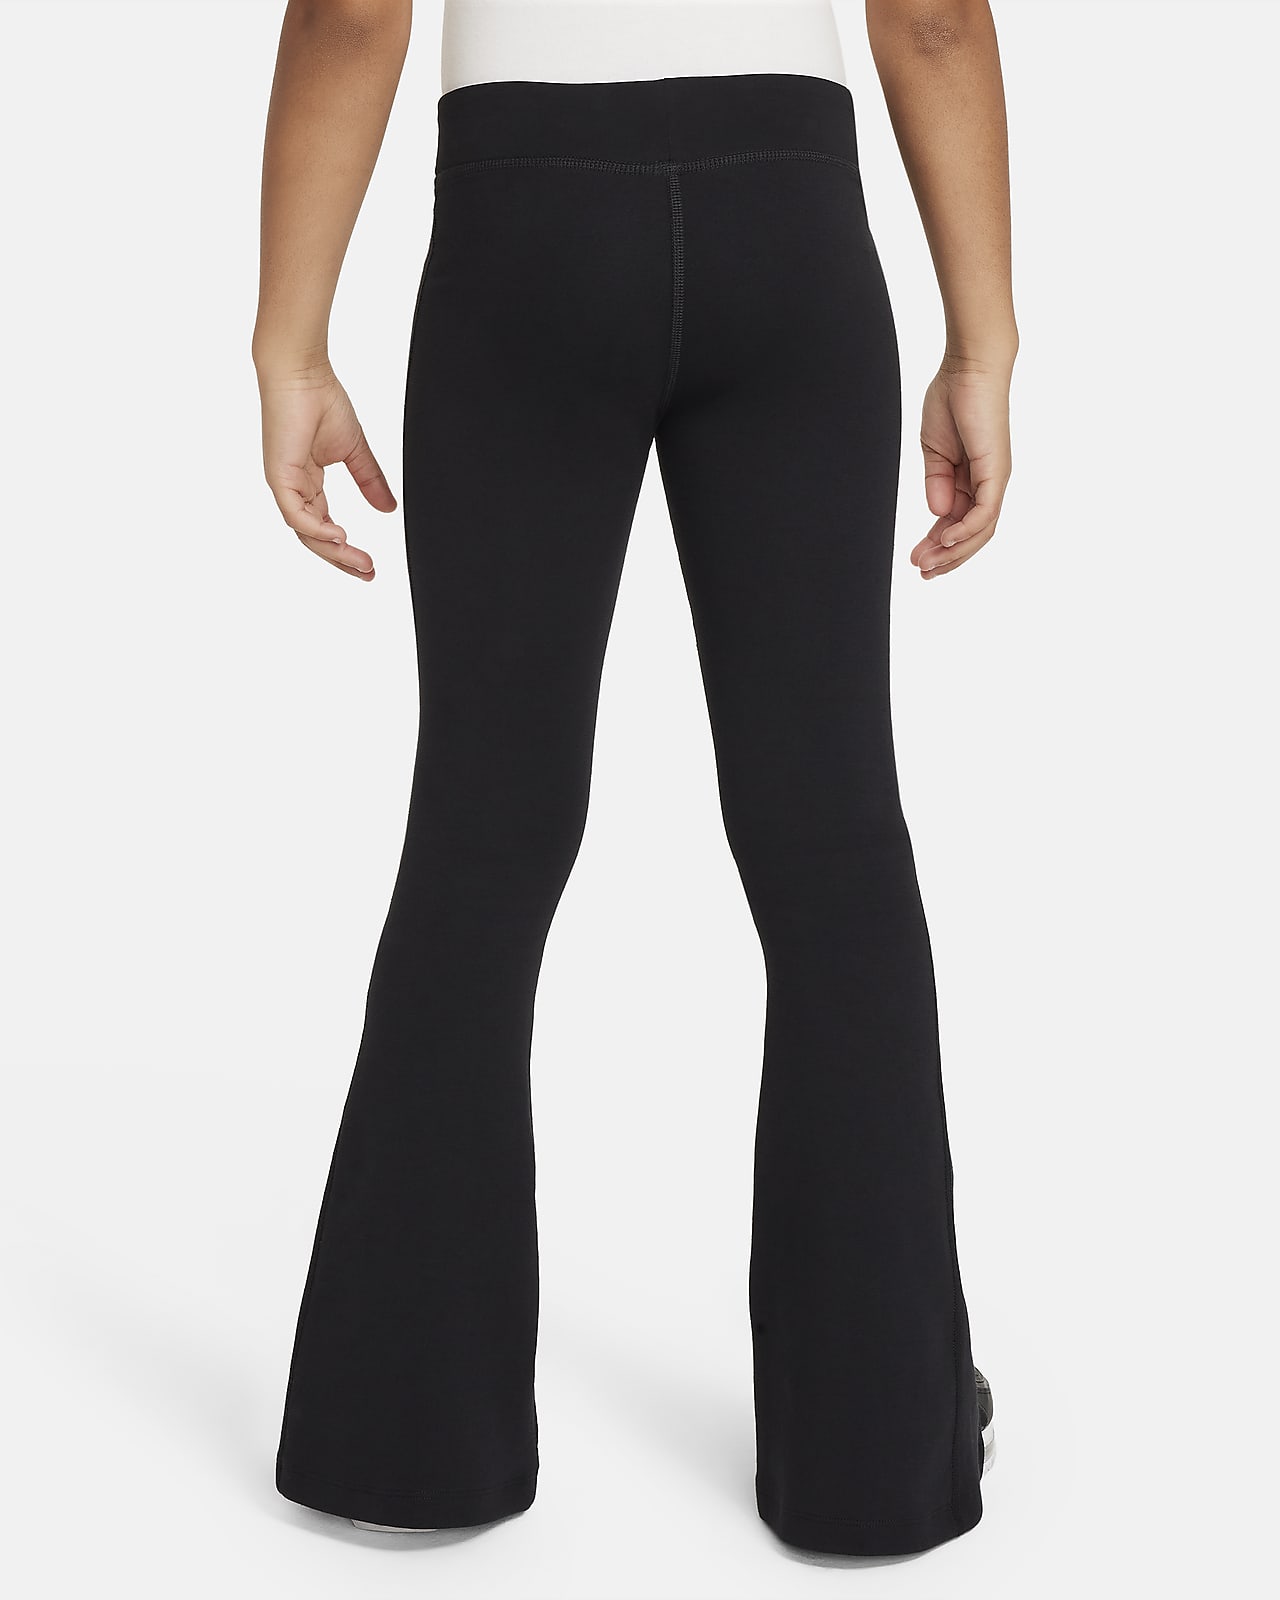 Bell Bottom Pants for Women Boho Print Stretchy High Waist Flare Yoga Pants  Slim Fit Palazzo Leggings Trousers - Walmart.com